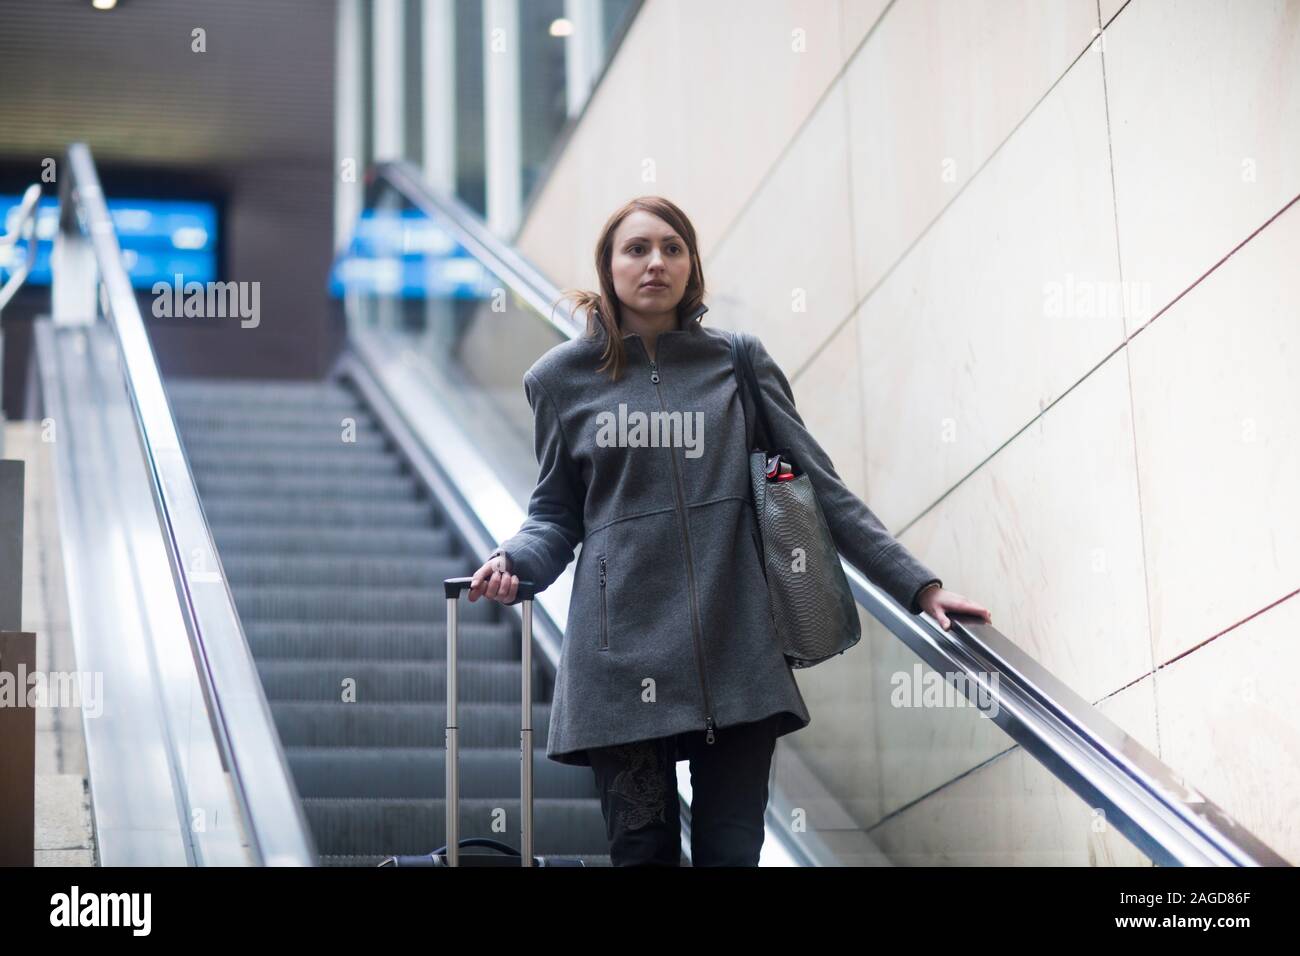 Young woman on escalator in train terminal Stock Photo